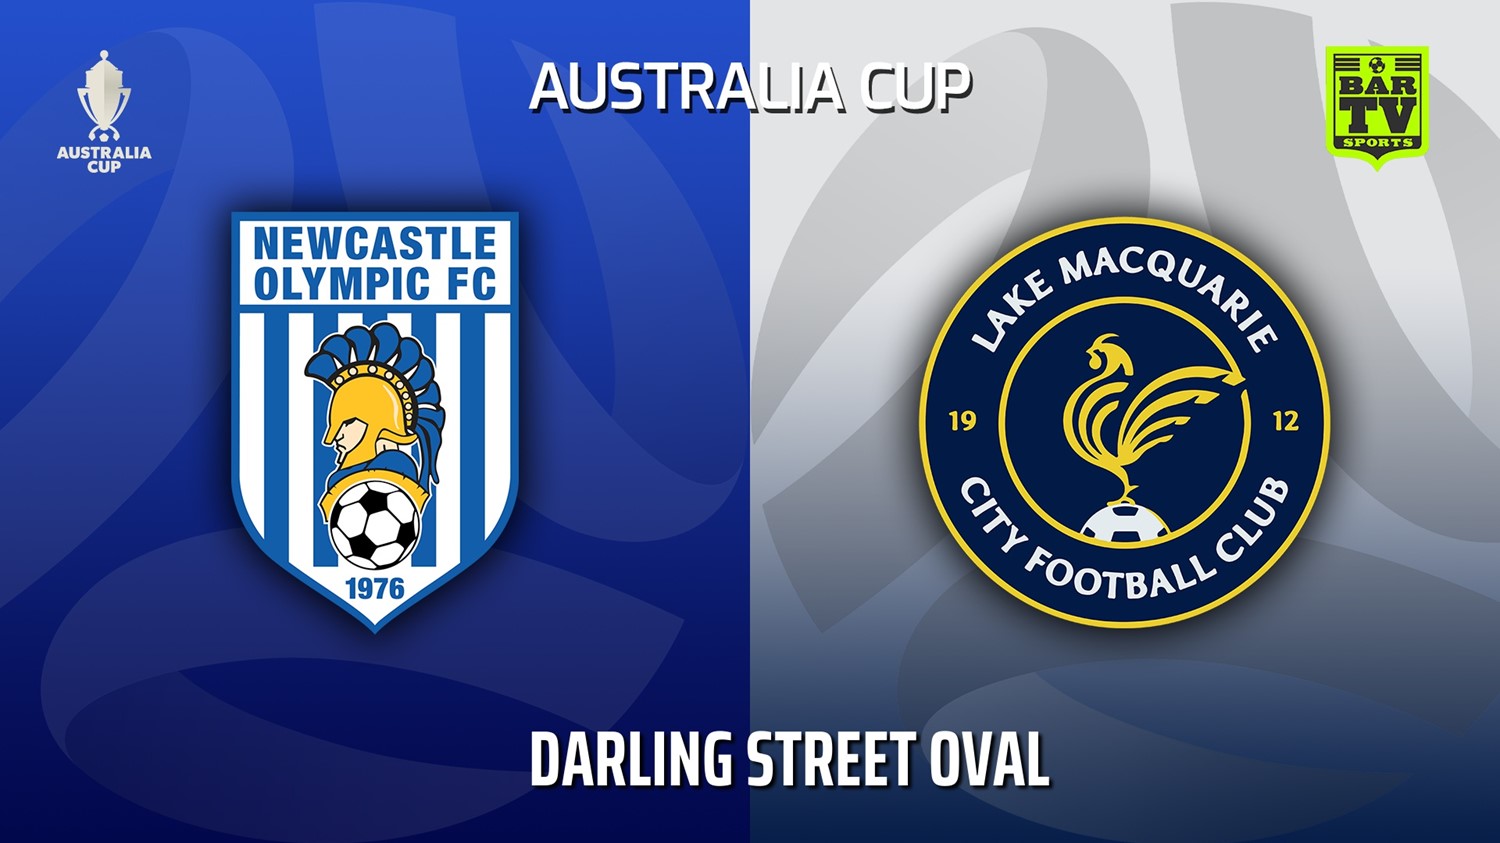 220612-Australia Cup Qualifying Northern NSW Newcastle Olympic v Lake Macquarie City FC Minigame Slate Image